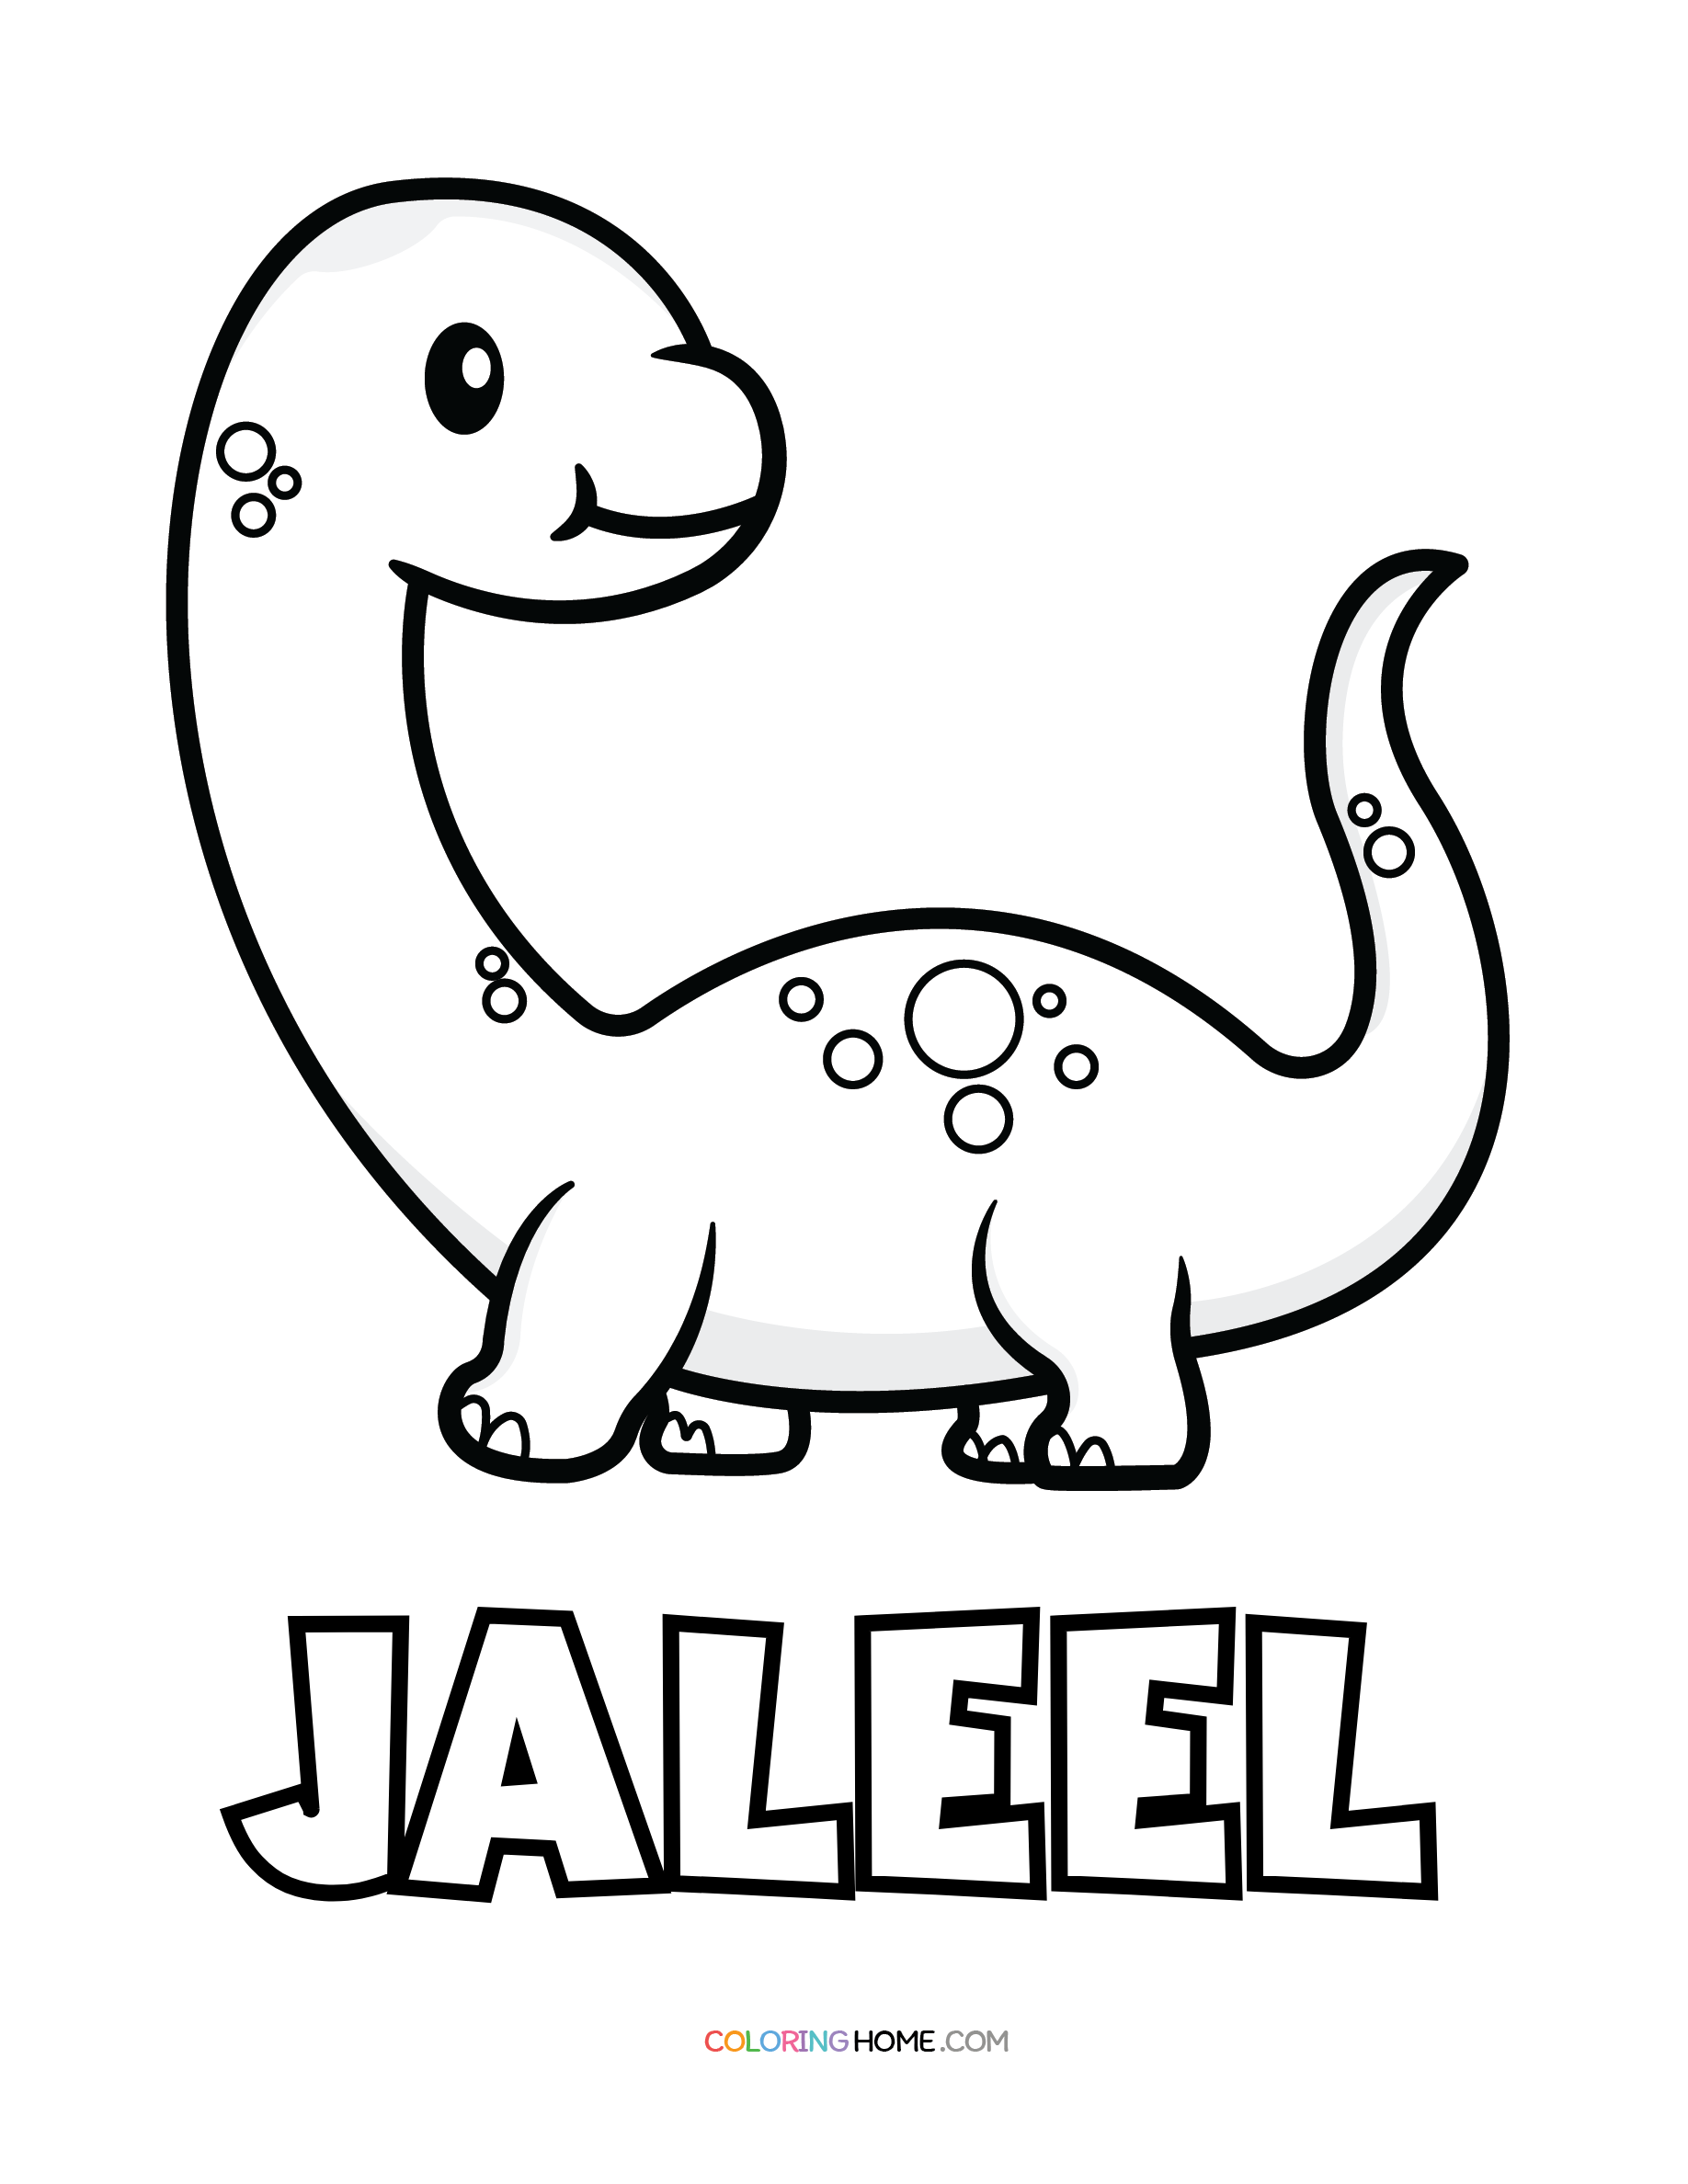 Jaleel dinosaur coloring page